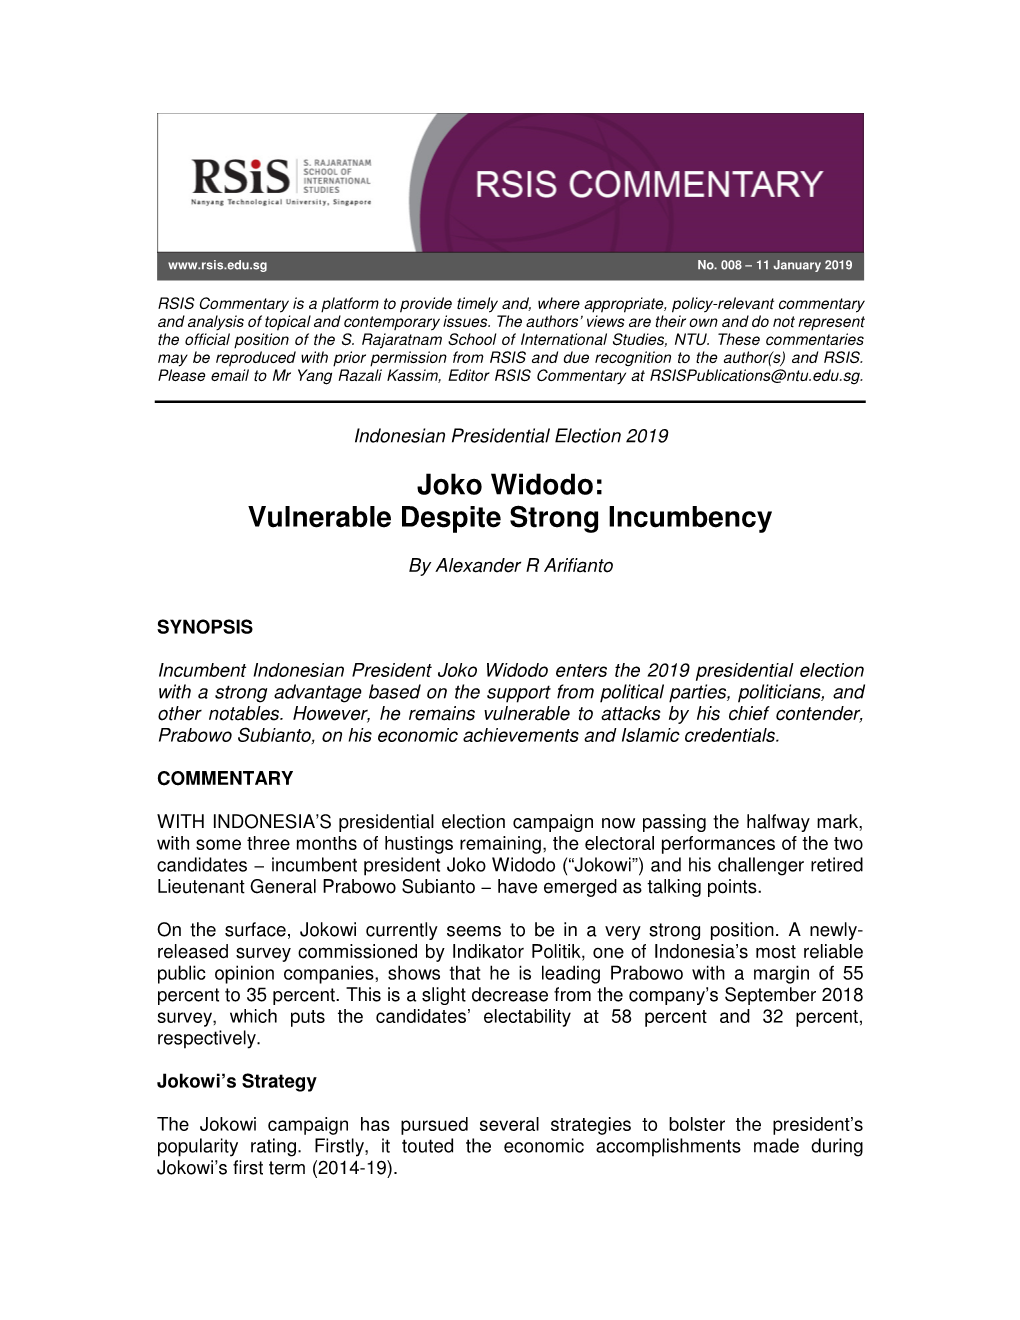 Joko Widodo: Vulnerable Despite Strong Incumbency